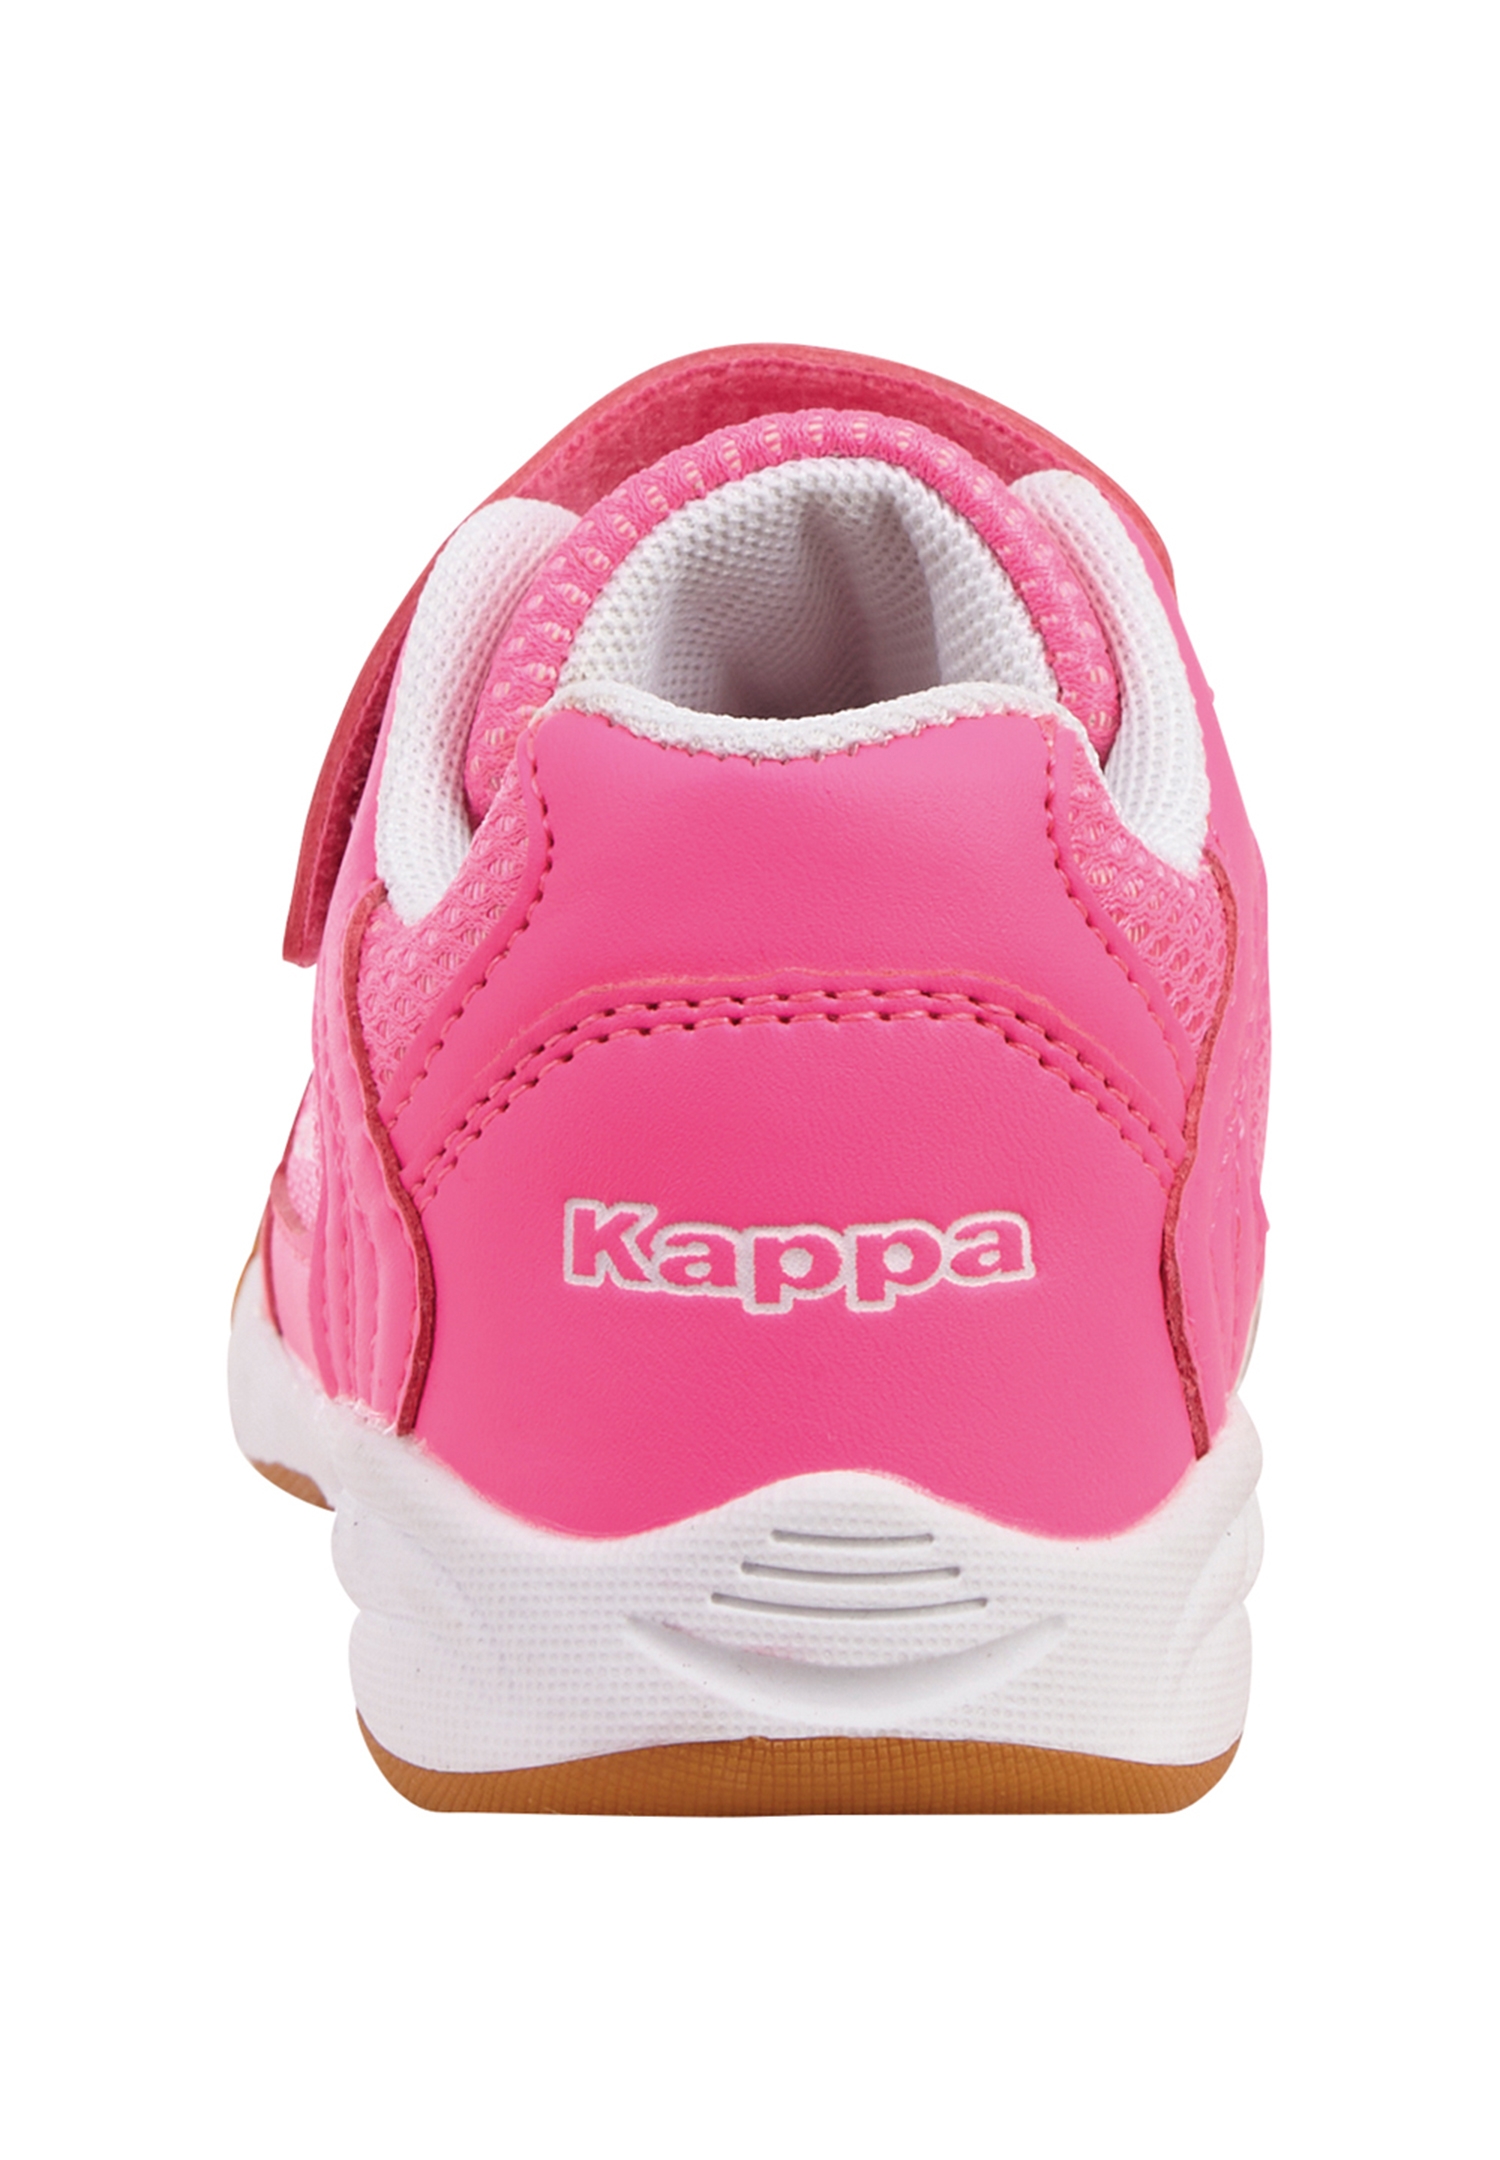 Kappa Mädchen Sneaker Turnschuh 260765T 2210 Pink White